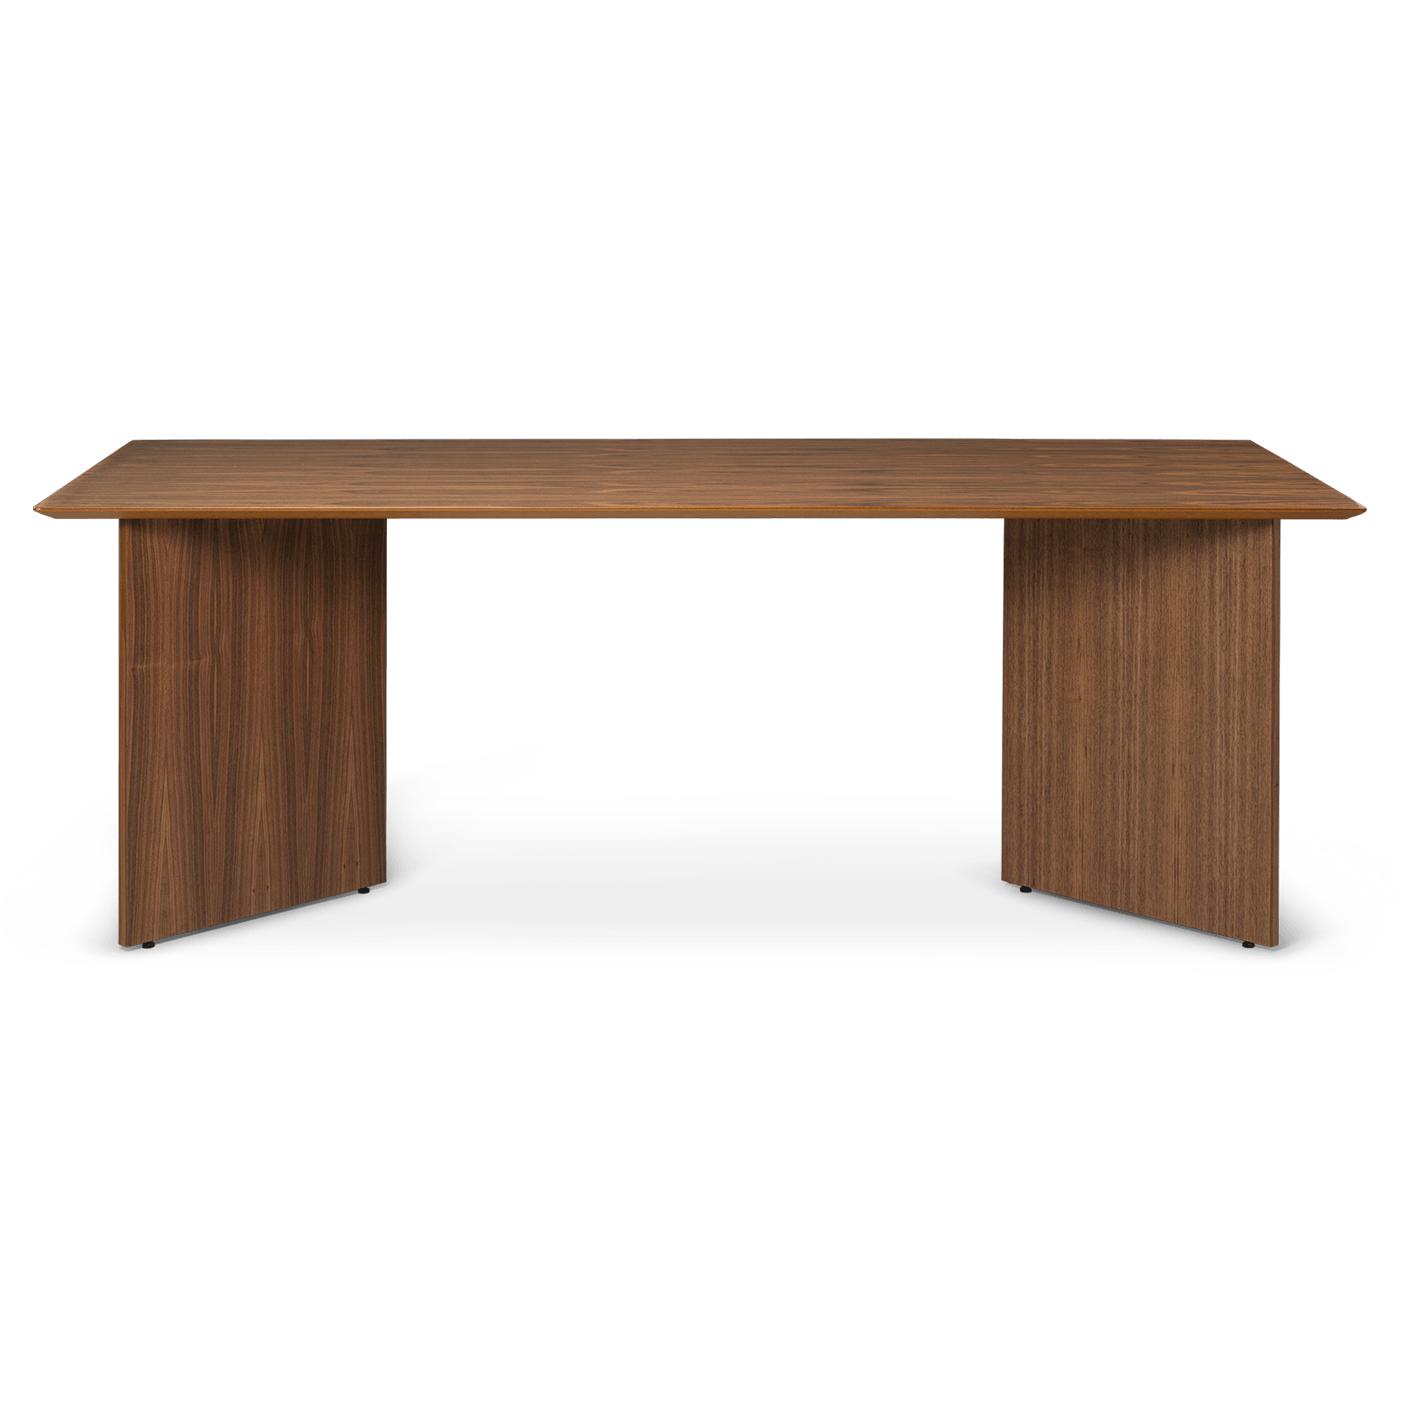 Ferminvent table de mesa viviente nogal, 210 cm